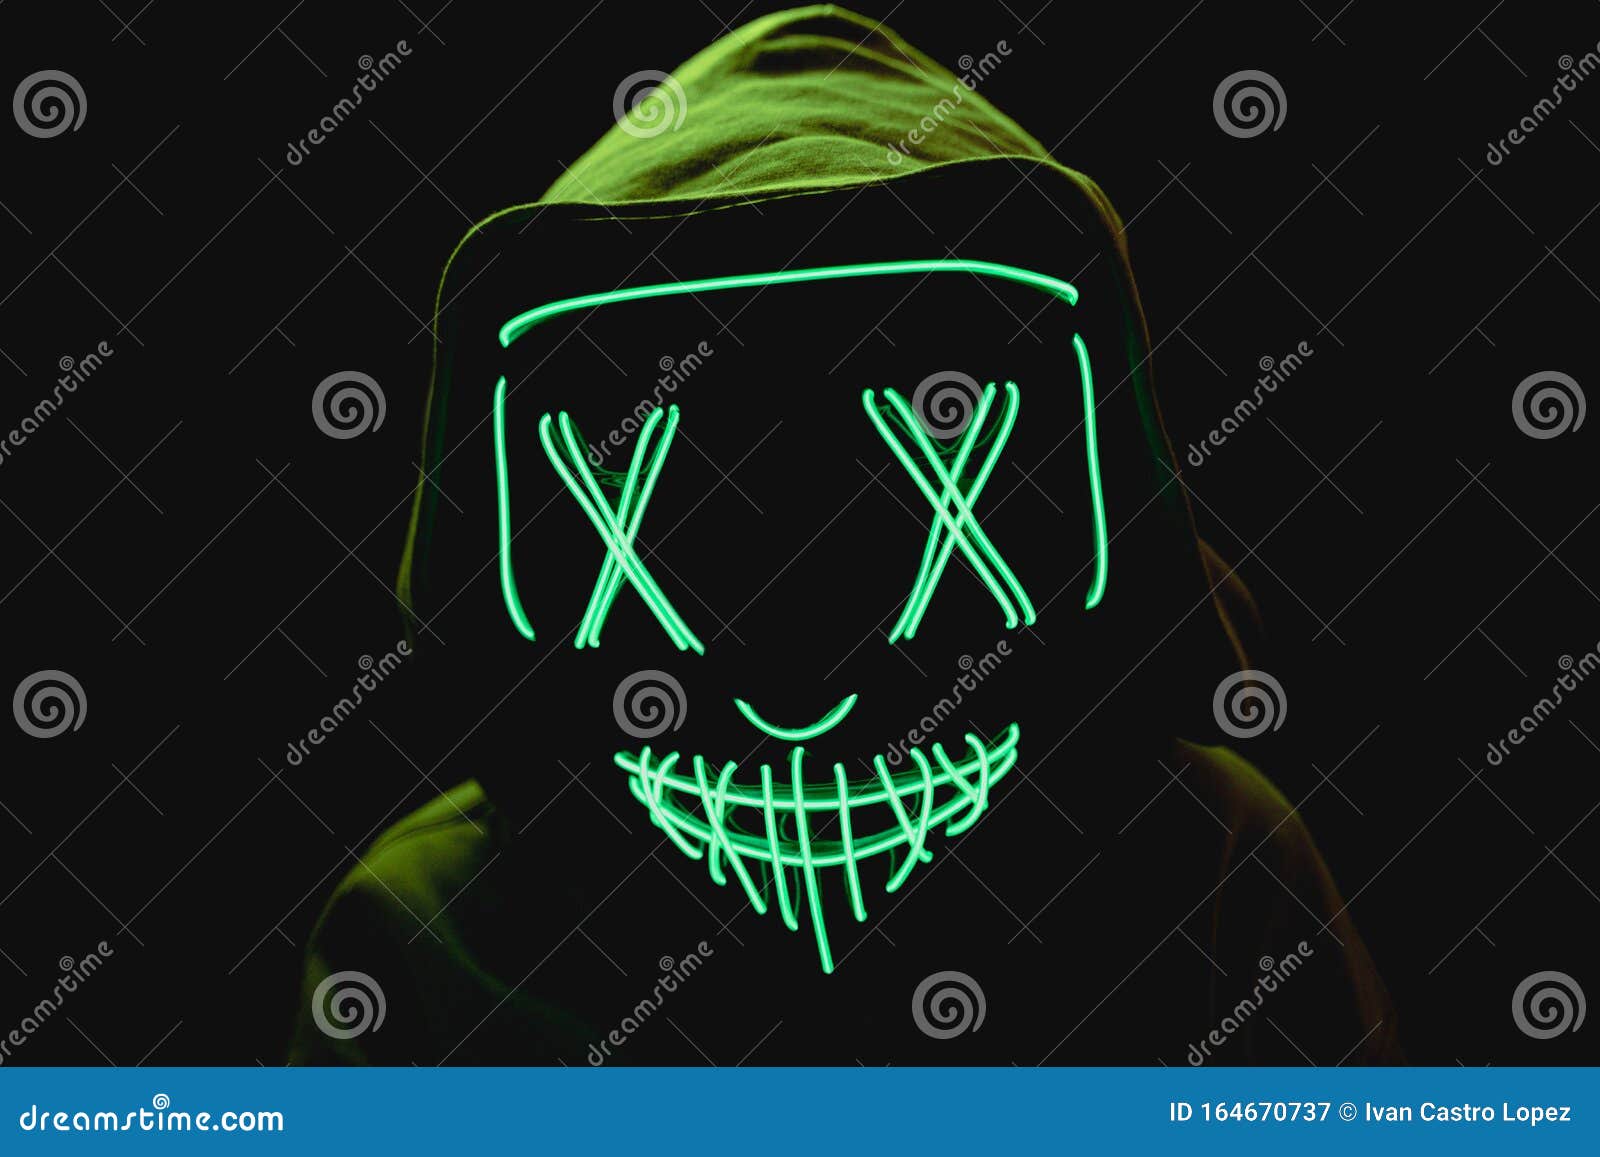 an horror green led mask for halloween